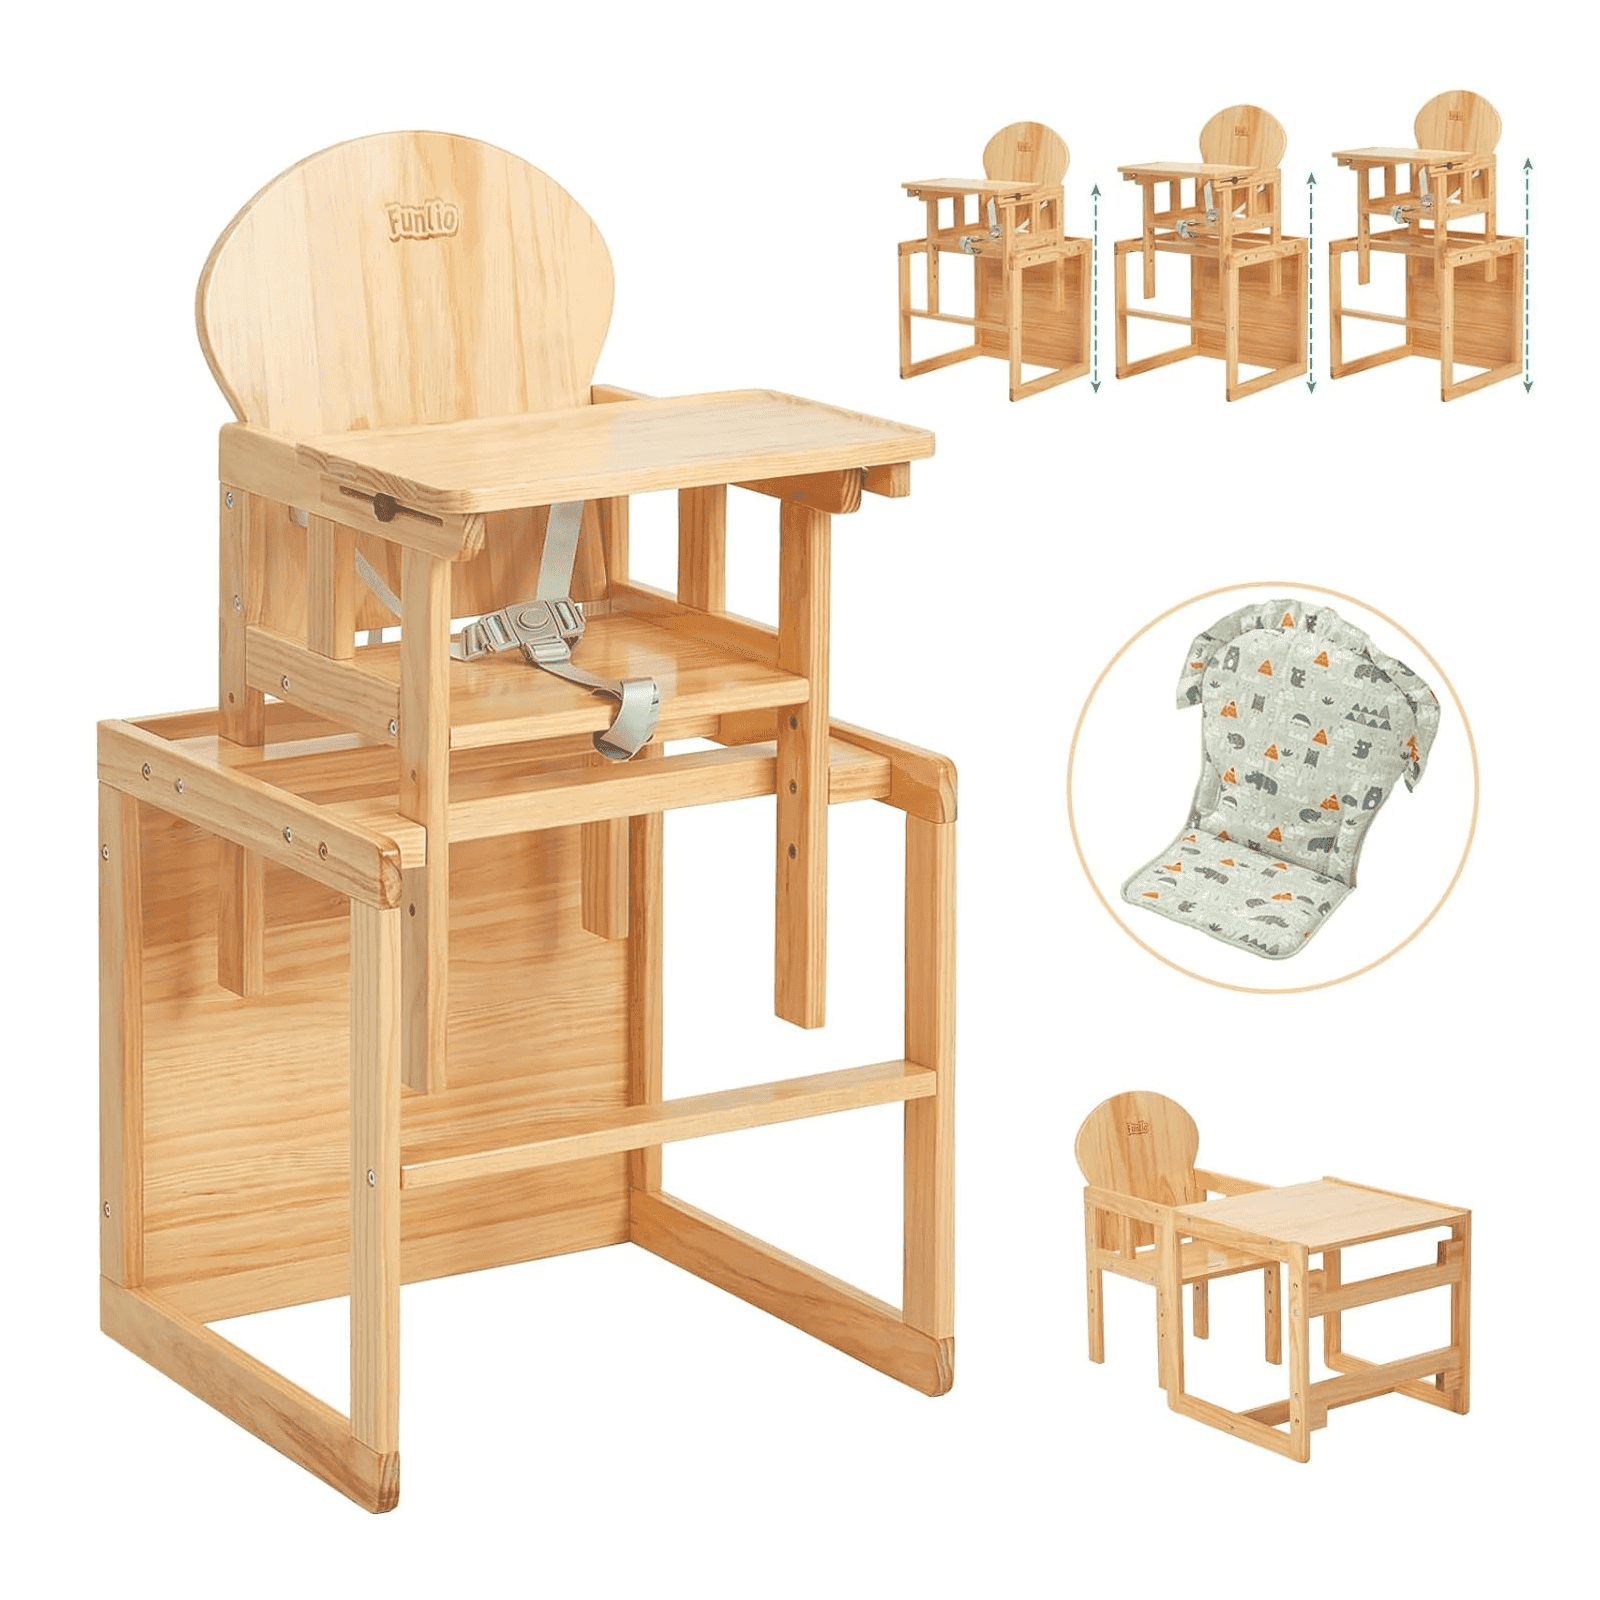 Montessori FUNLIO 3-Level Height Adjustable High Chair